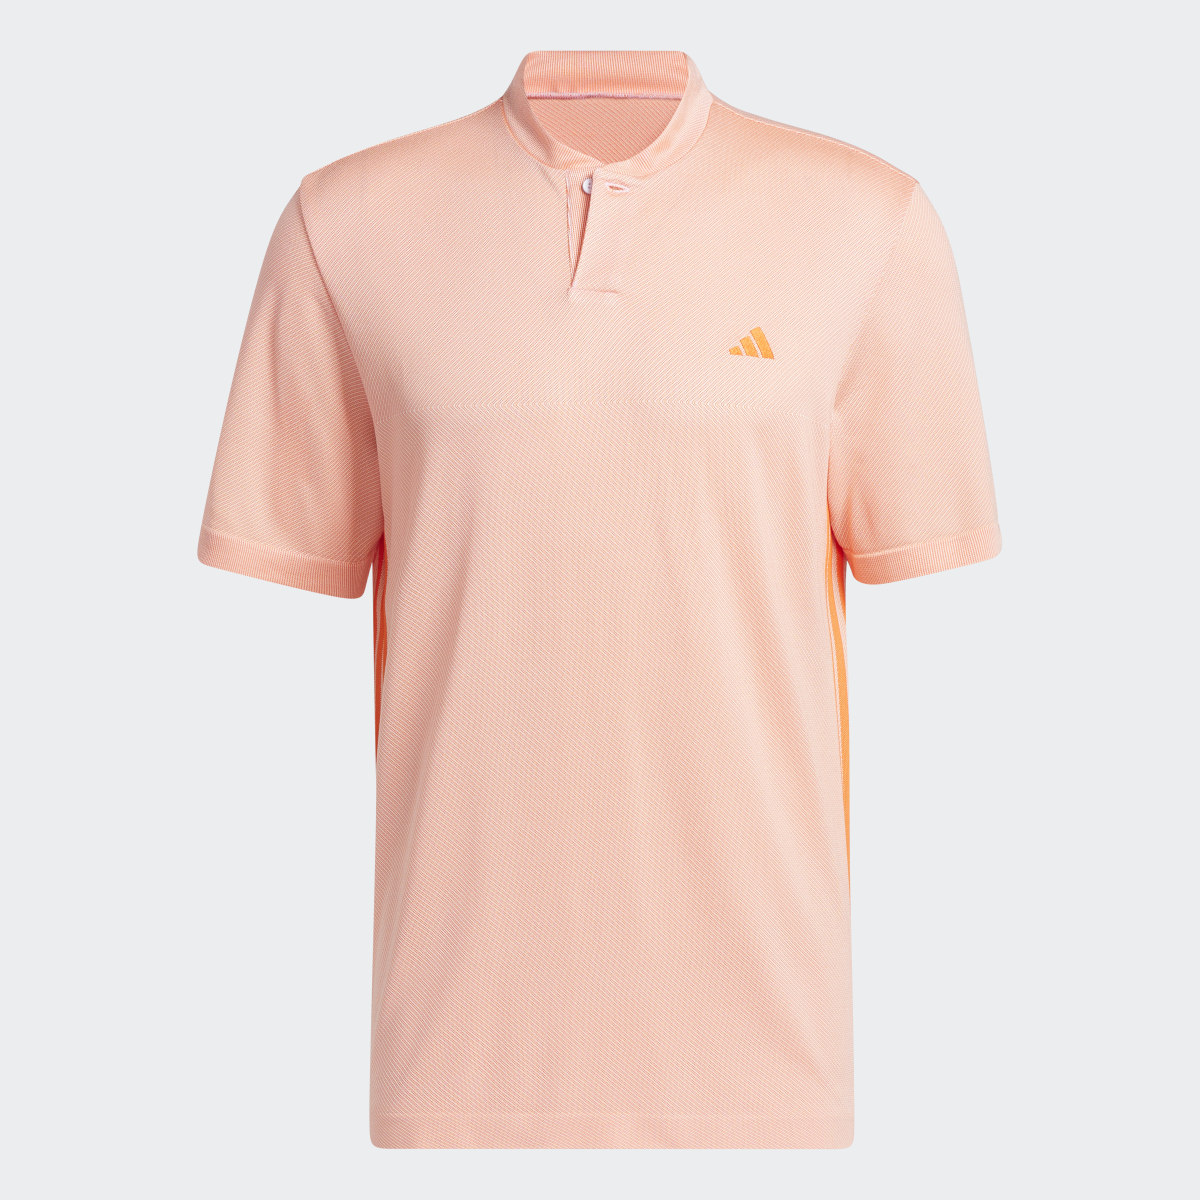 Adidas Made To Be Remade Henry Neck Seamless Golf Shirt. 6